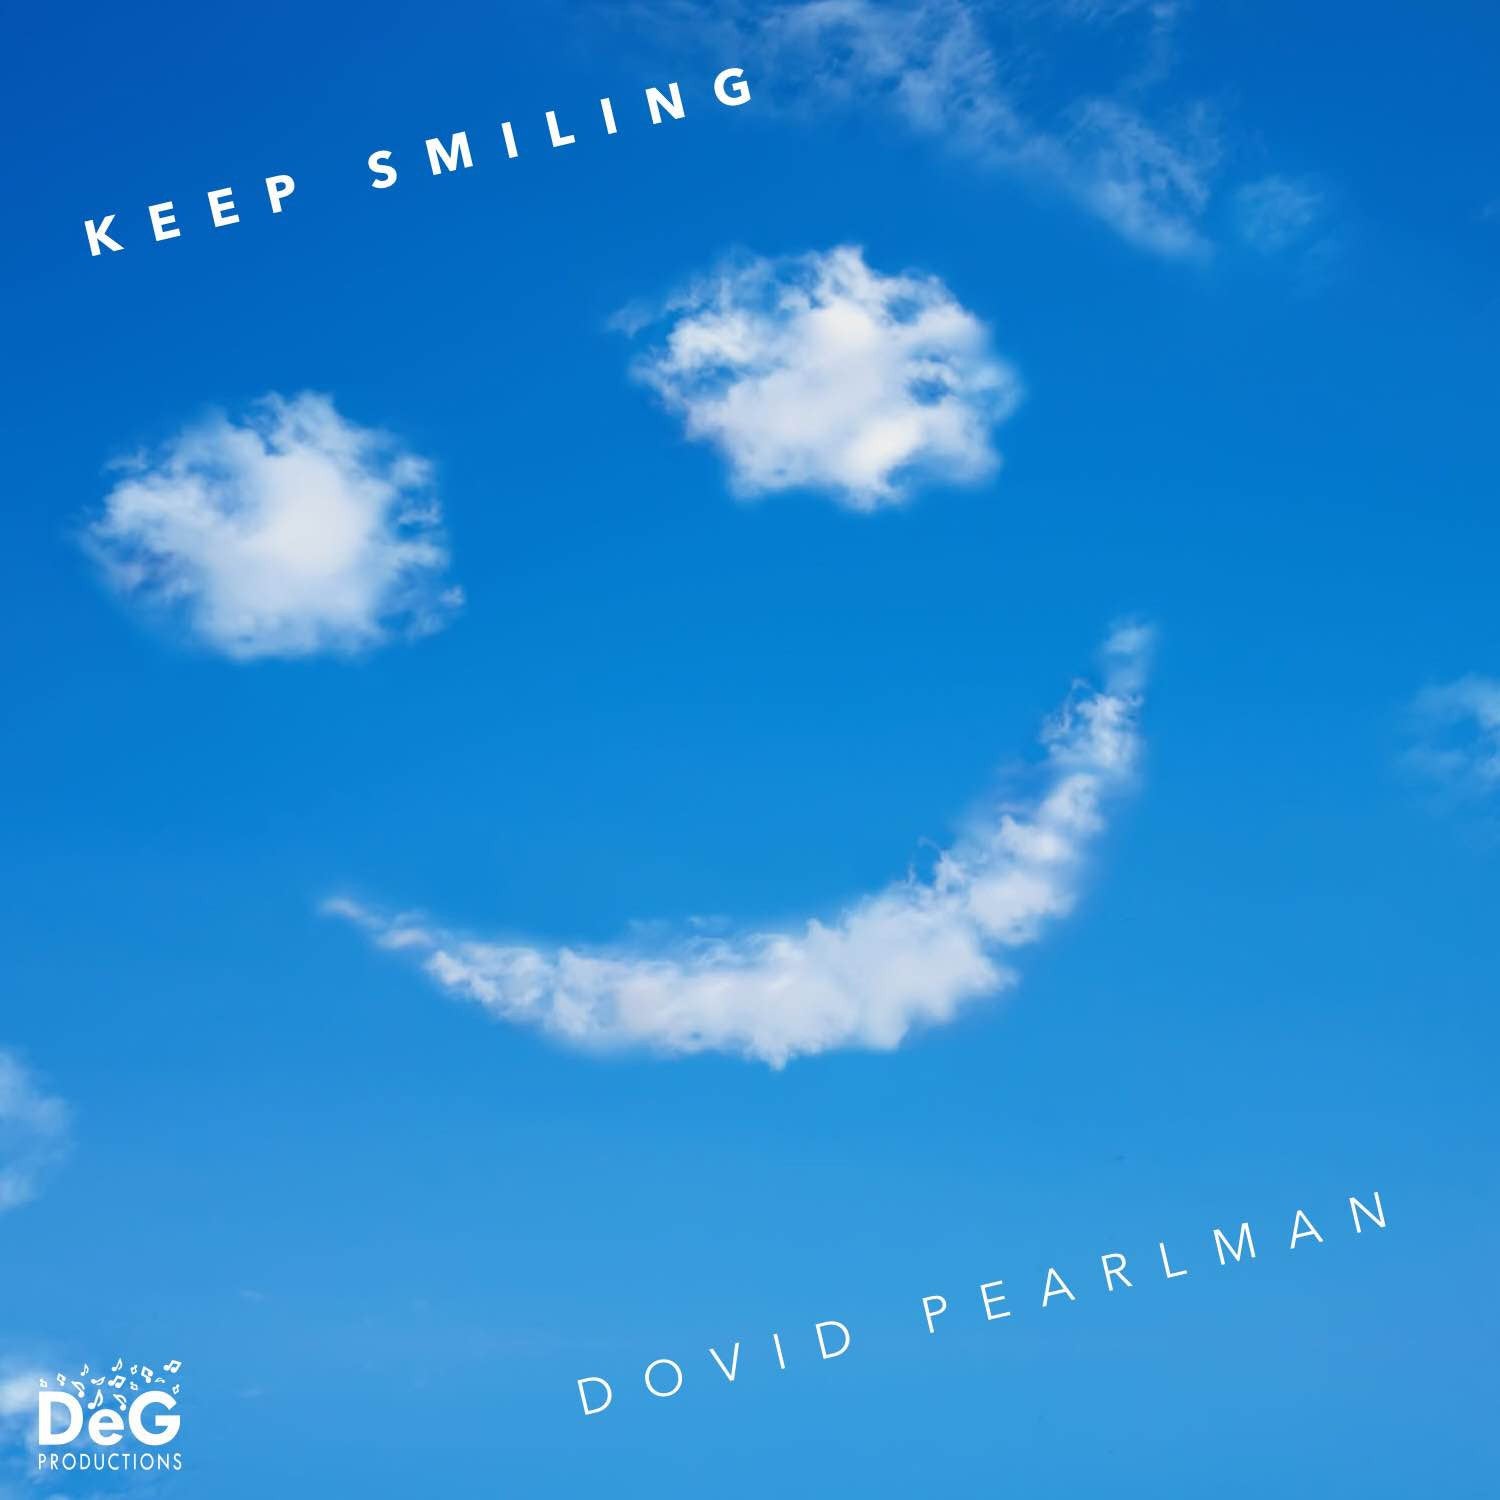 Dovid Pearlman - Keep Smiling (Single)